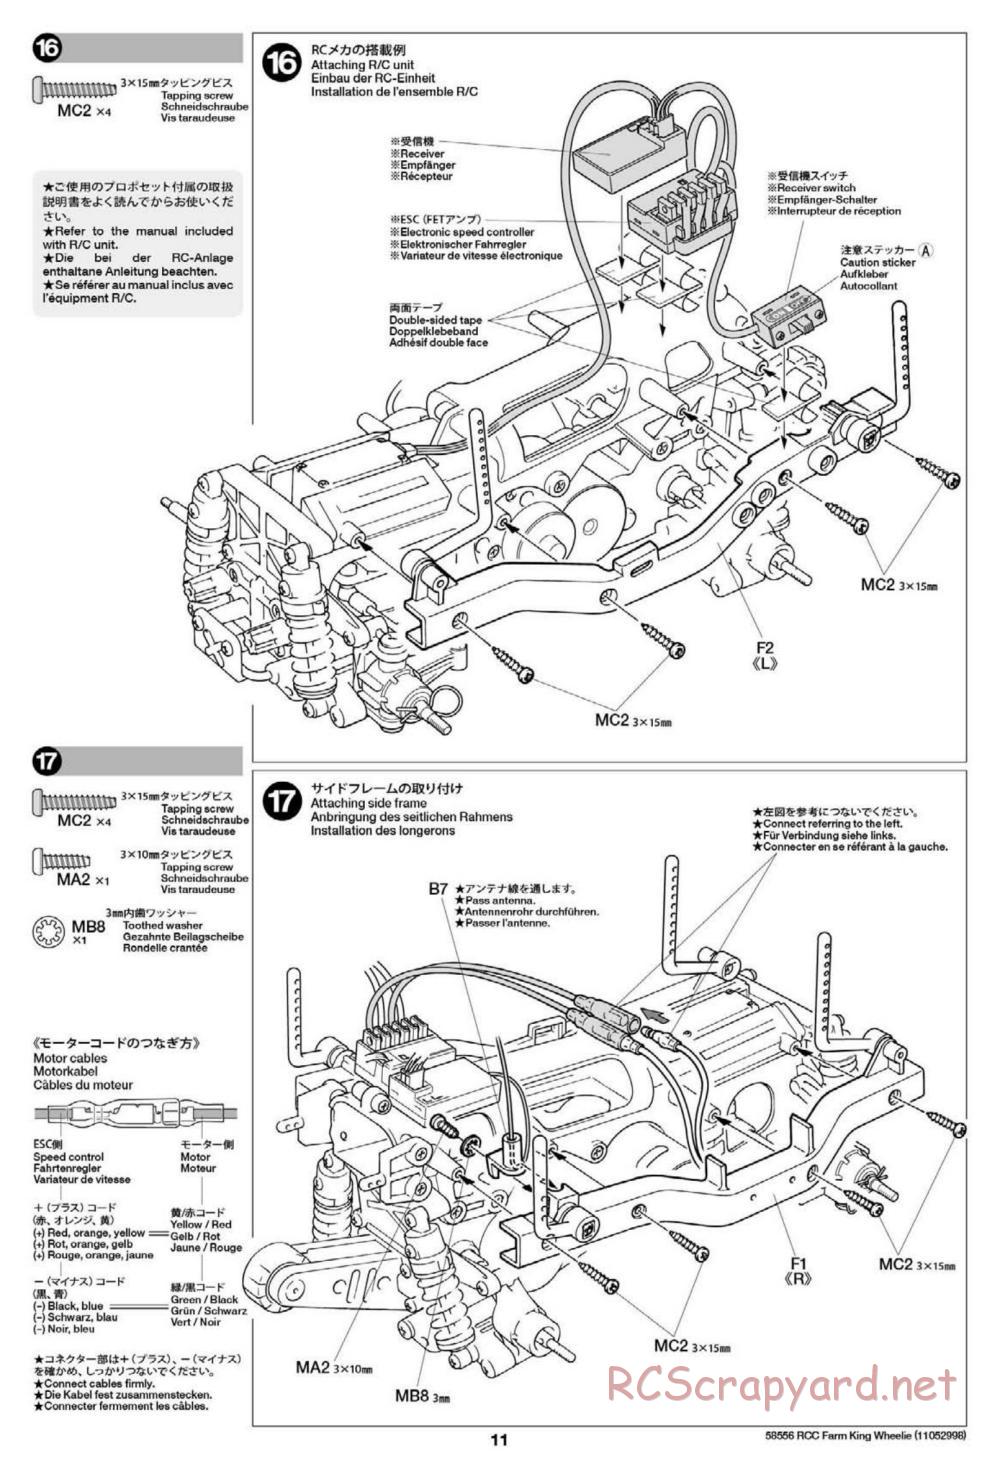 Tamiya - Farm King Wheelie Chassis - Manual - Page 11